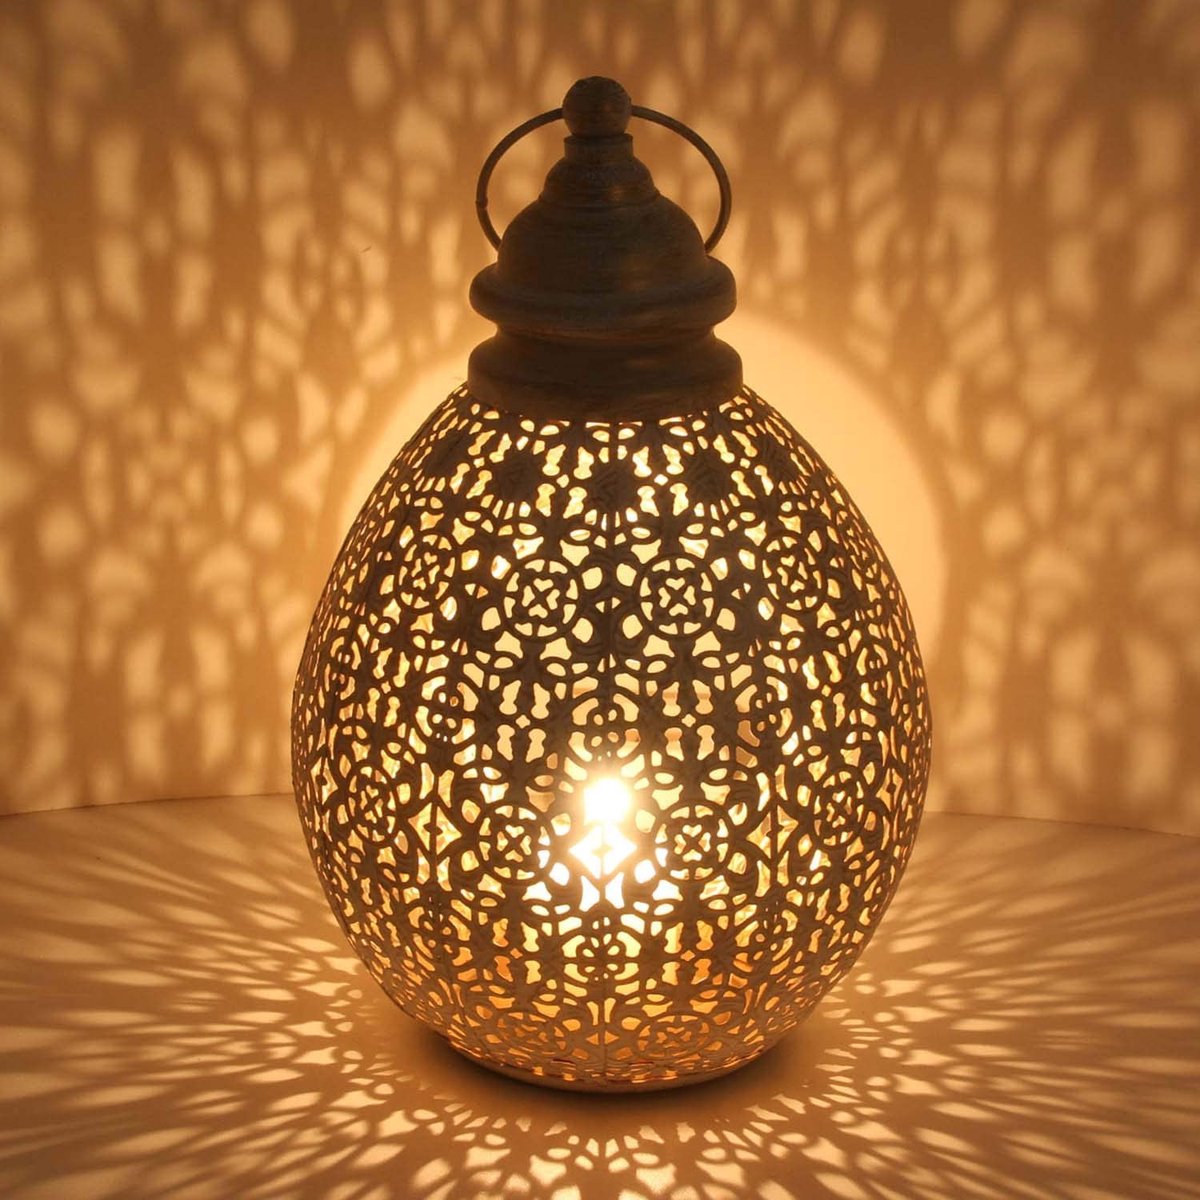 Oosterse lantaarn Omnia | Marokkaans windlicht maat L | hangend of staand |  bol.com